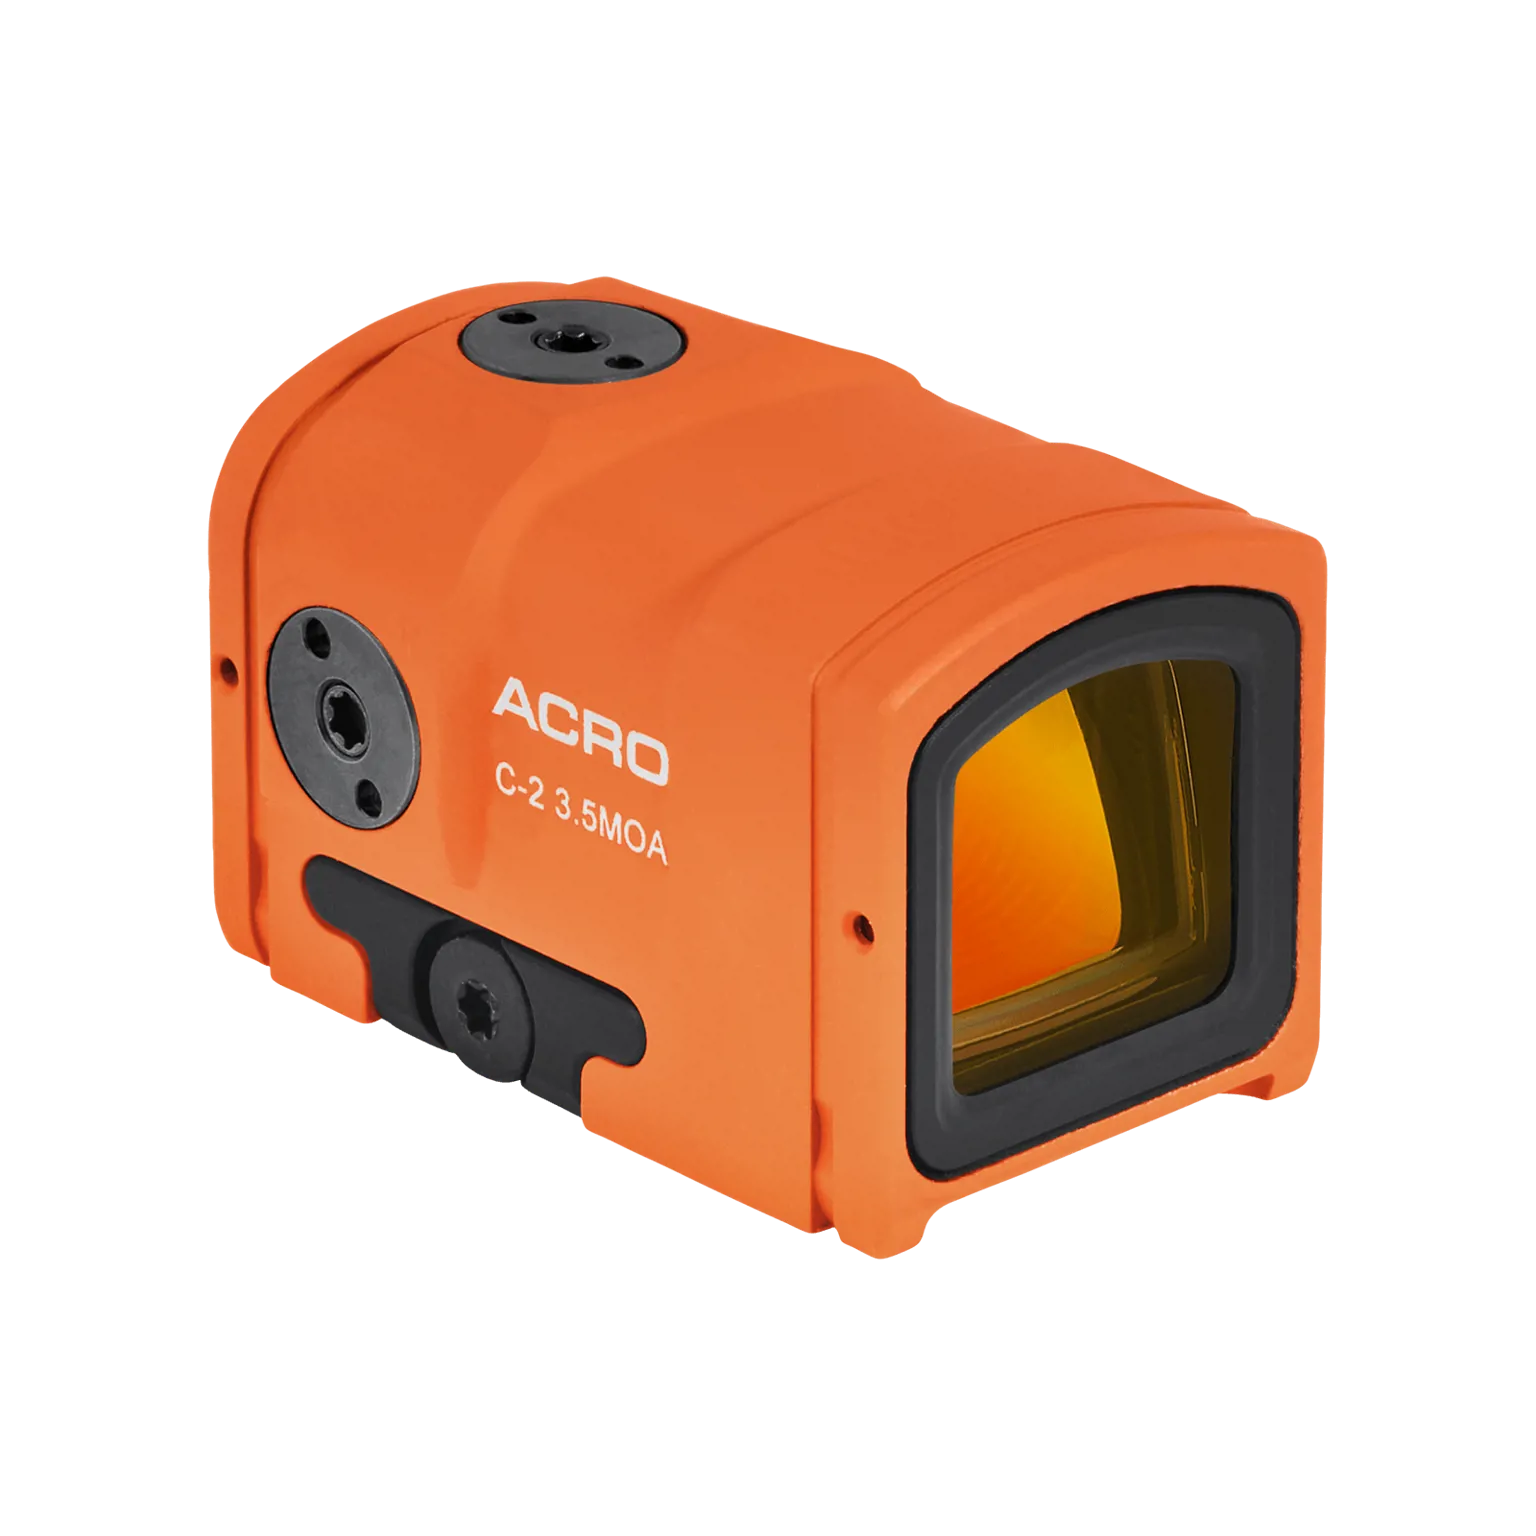 Acro C-2™ Orange 3.5 MOA - Rotpunktvisier mit integrierter Acro™ Schnittstelle - 3